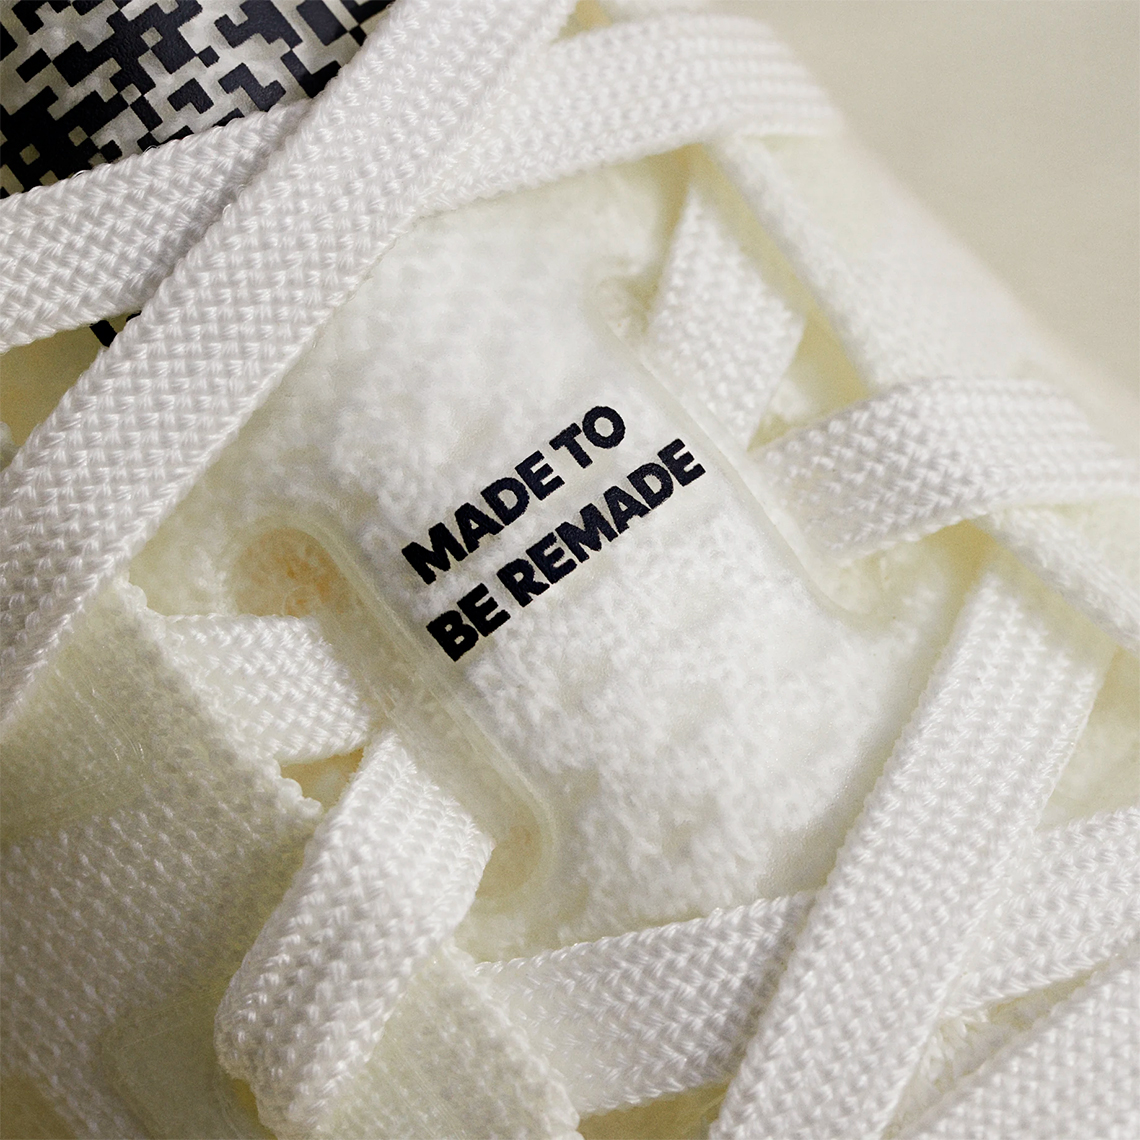 Adidas FUTURECRAFT "Made To Be Remade"